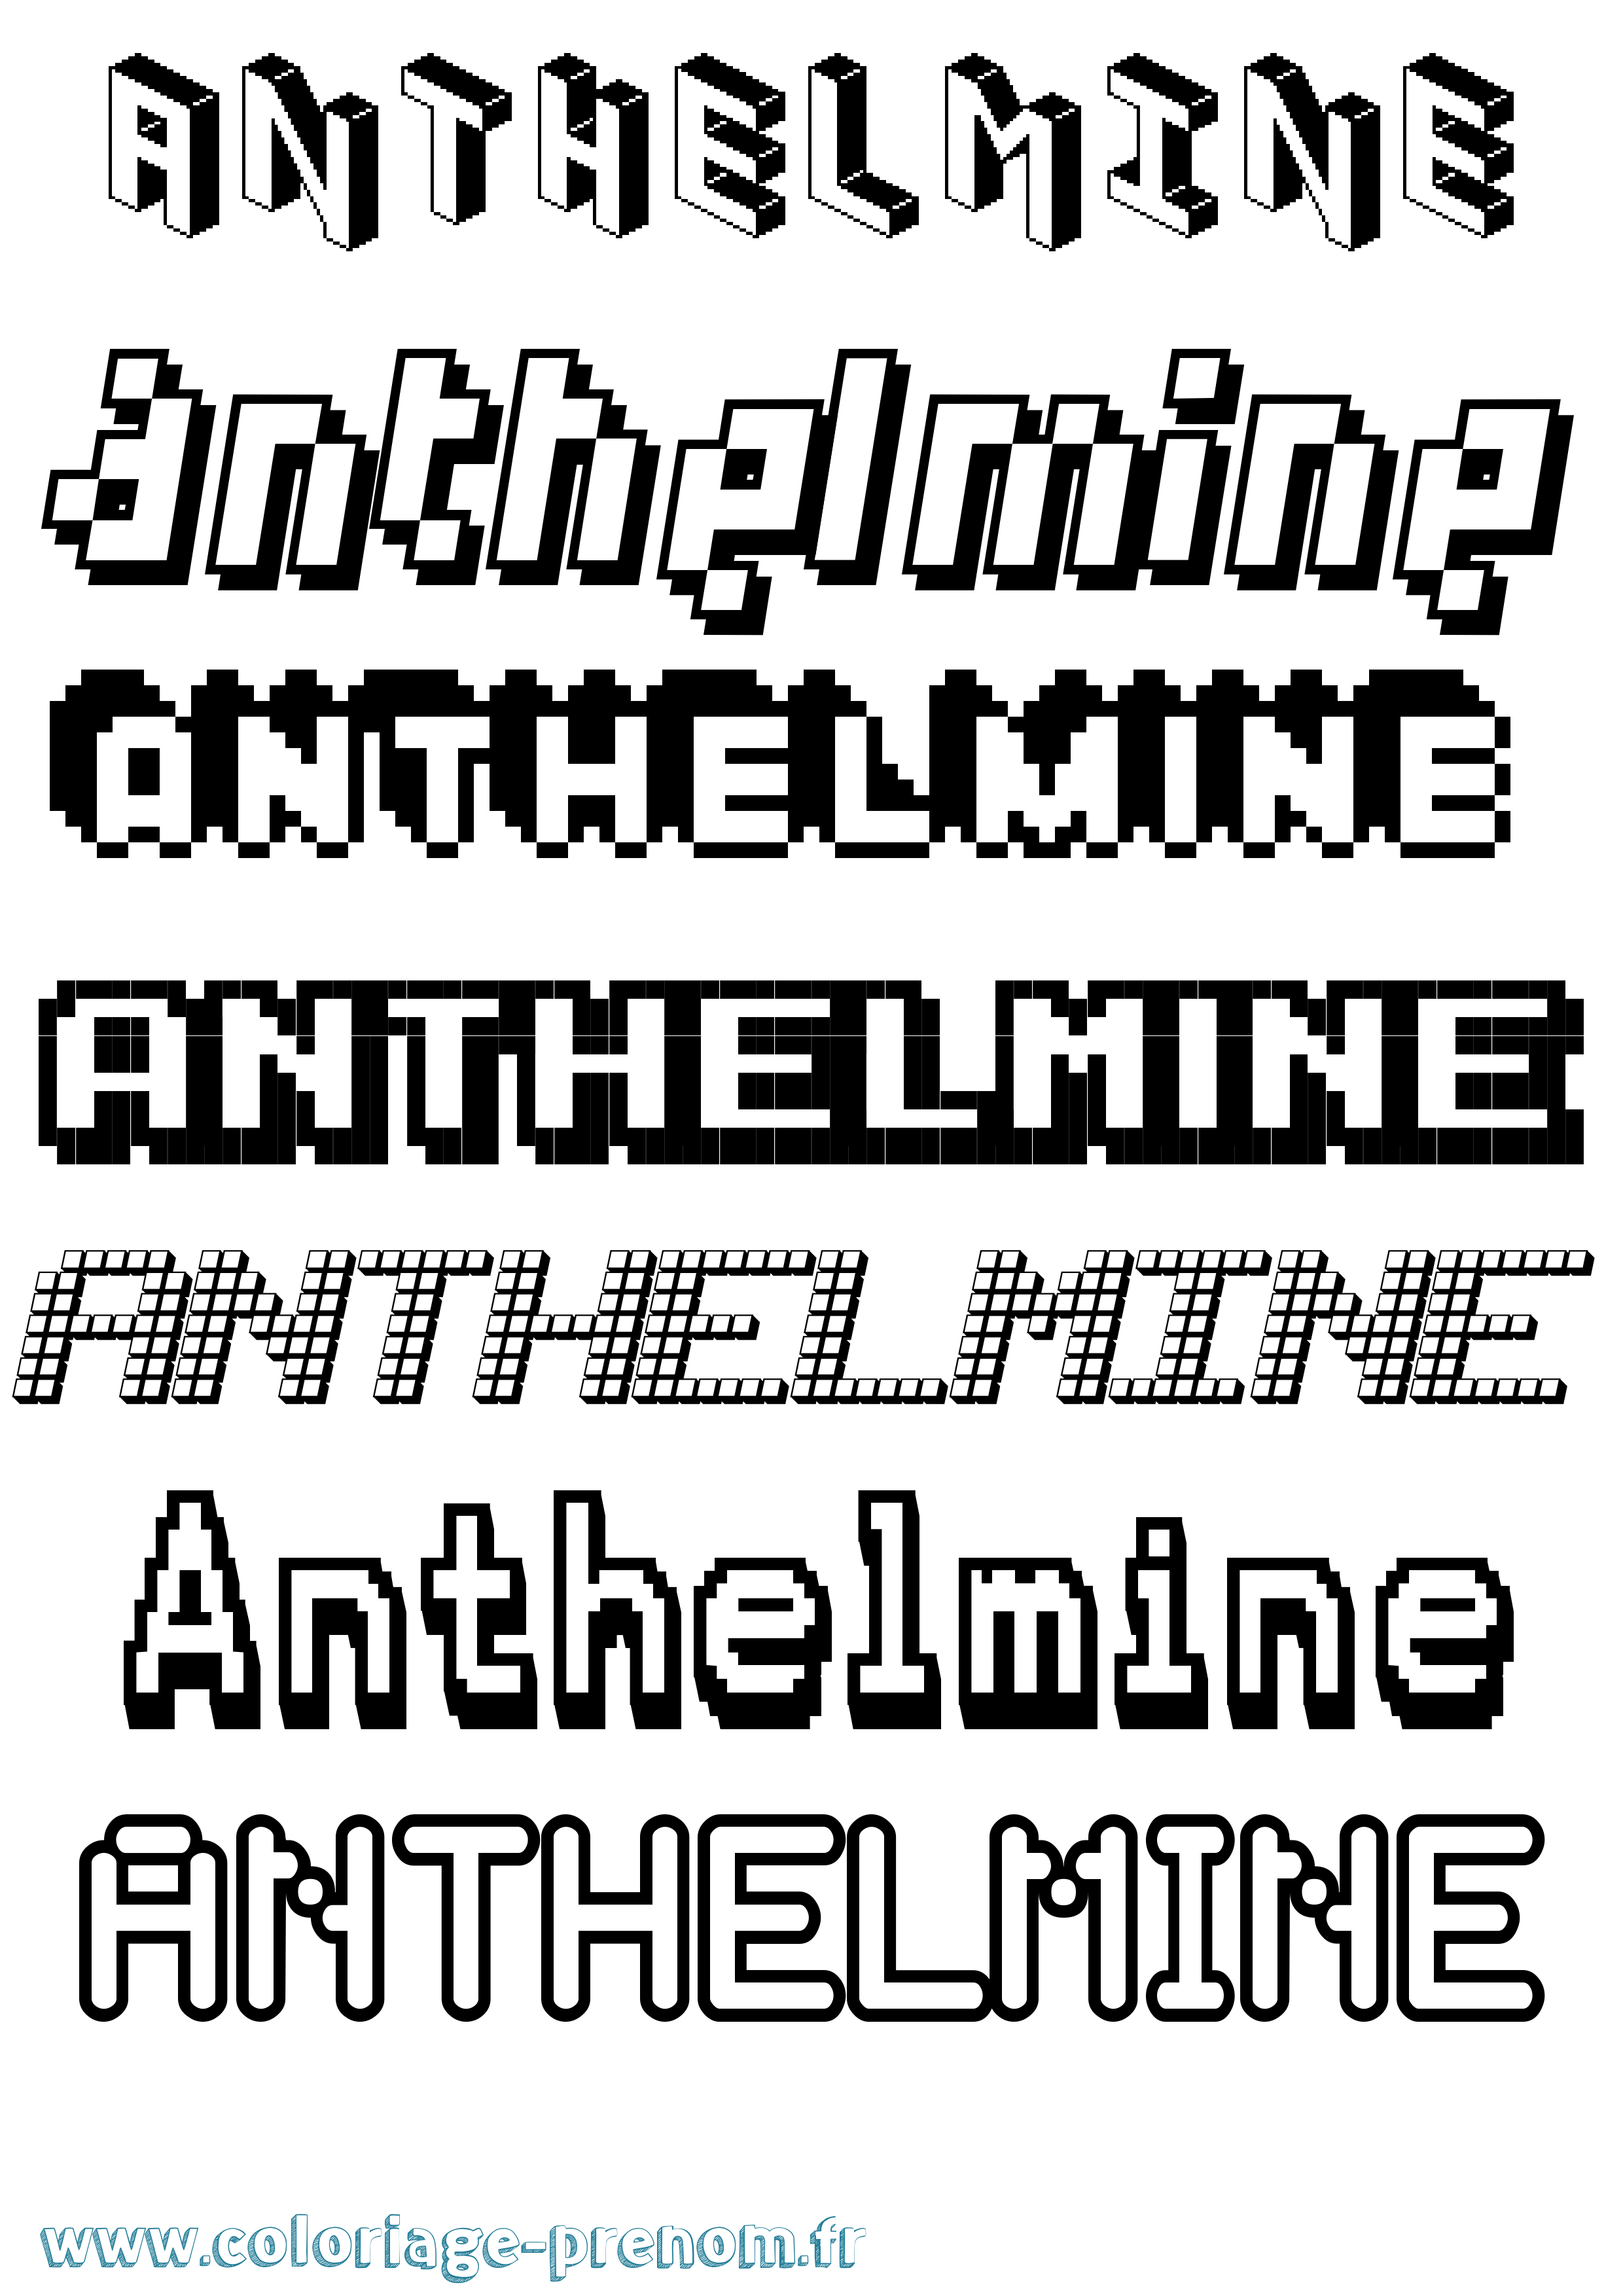 Coloriage prénom Anthelmine Pixel